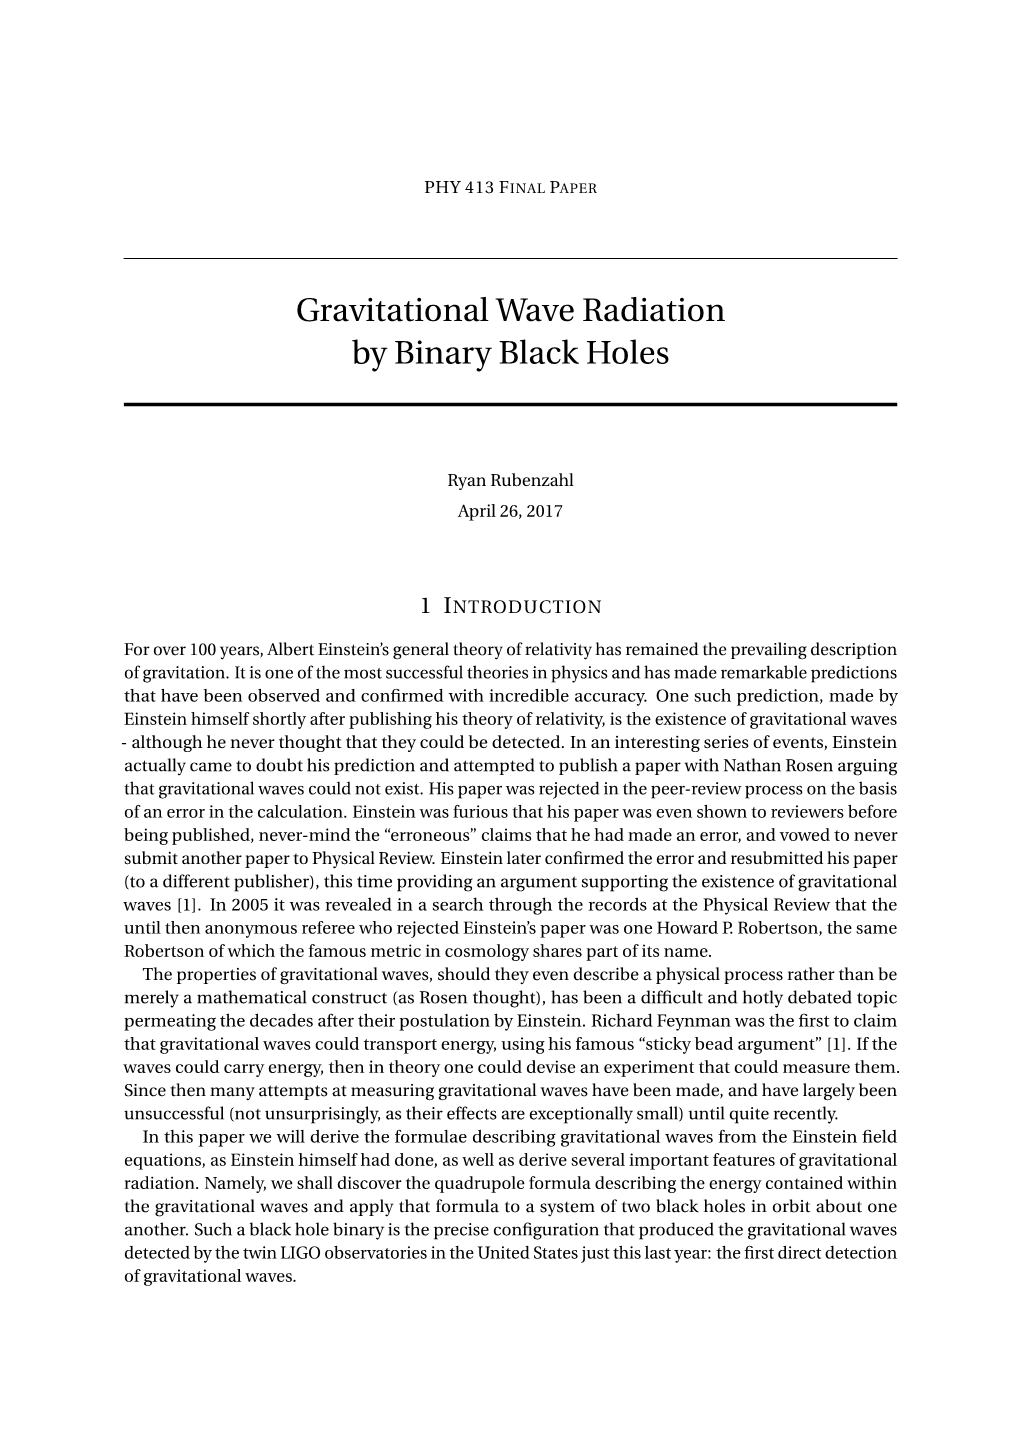 Gravitational Wave Radiation by Binary Black Holes